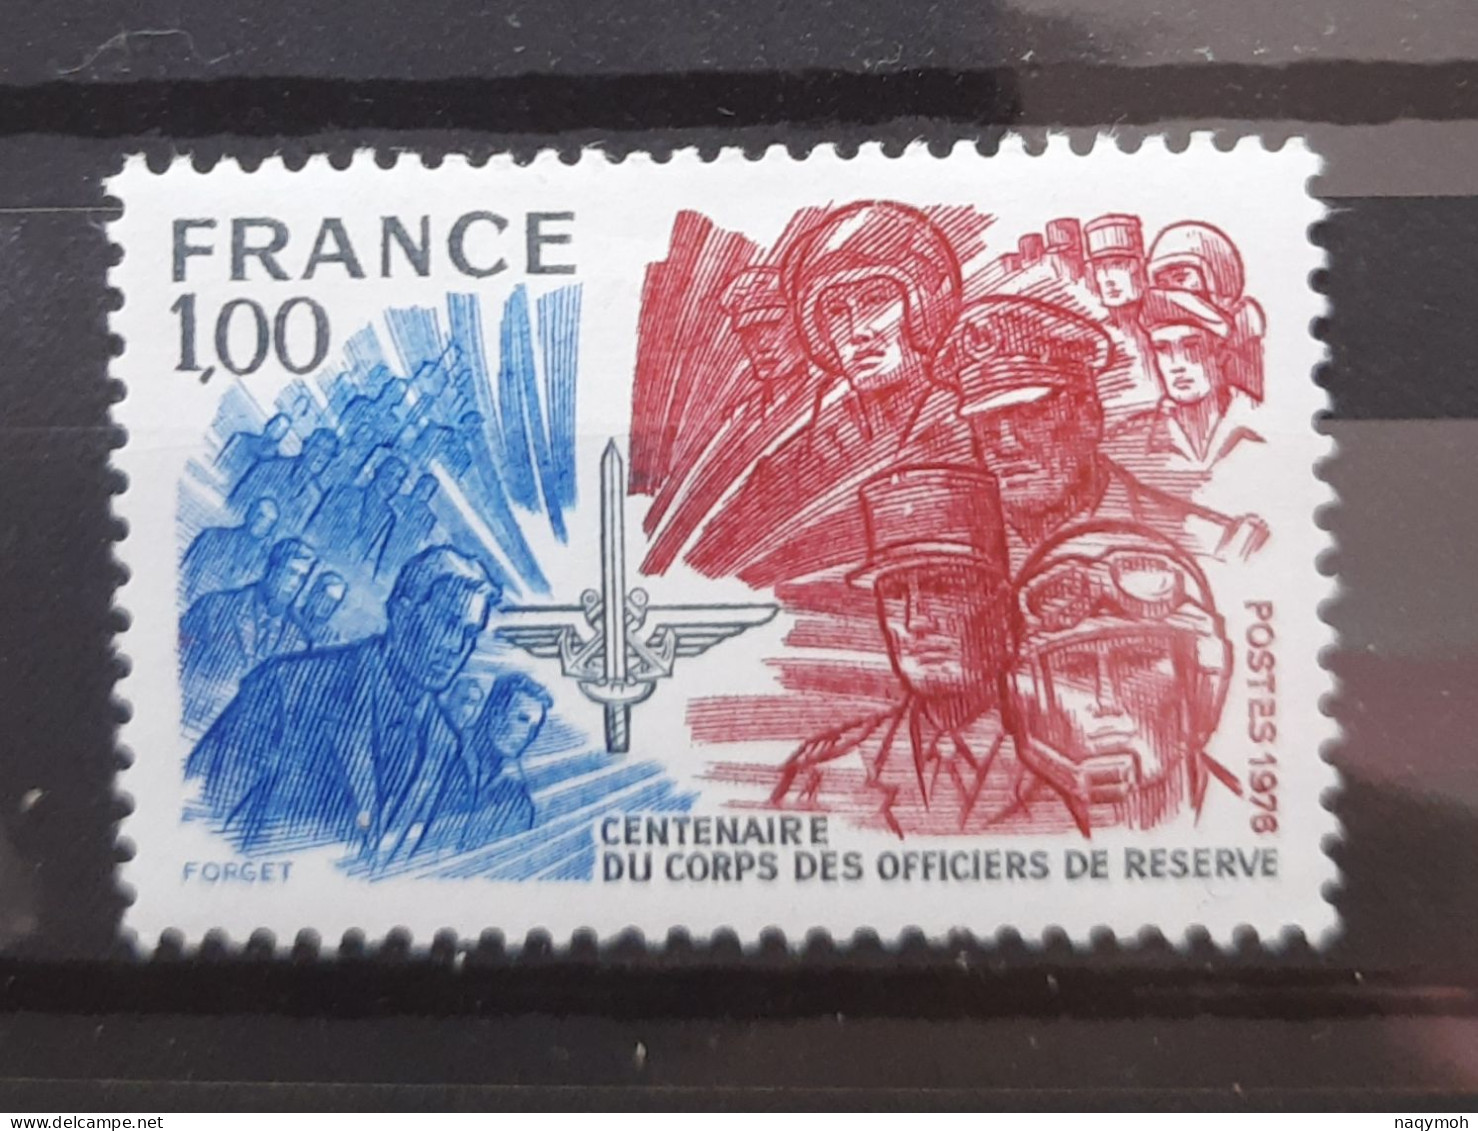 France Yvert 1890** Année 1976 MNH. - Unused Stamps